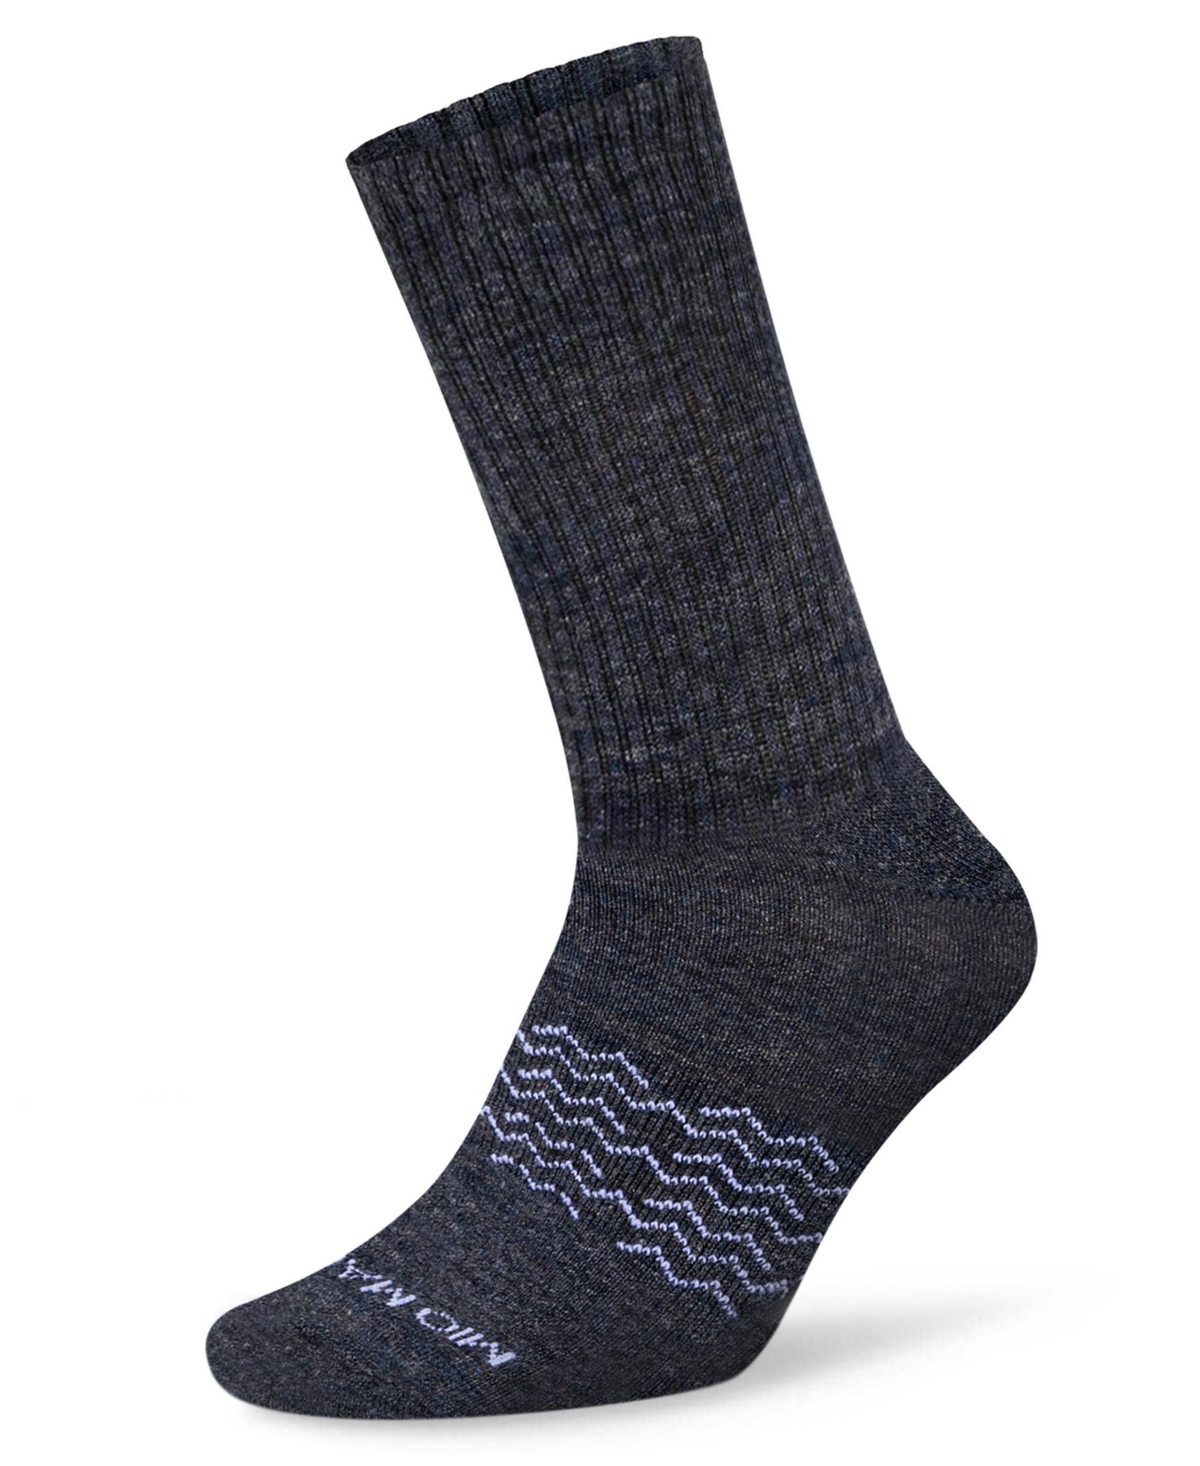 Men's Moisture Control Athletic Crew Socks 1 Pack - Black - space dye